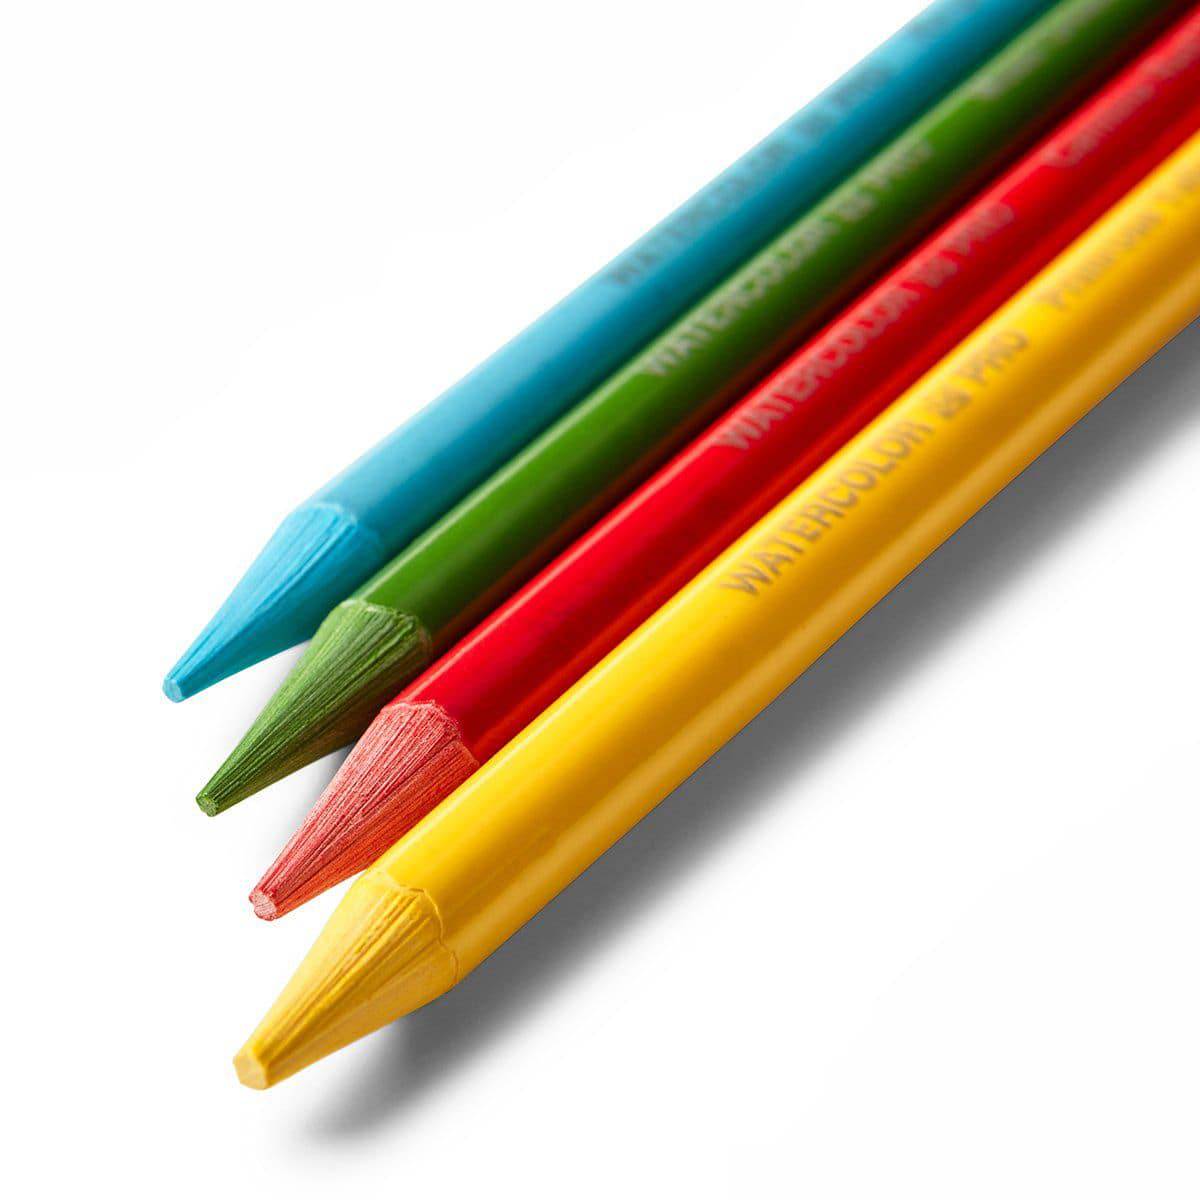 Kingart Studio Colored Pencil Set, Soft Wax-Based Cores, Set of 72